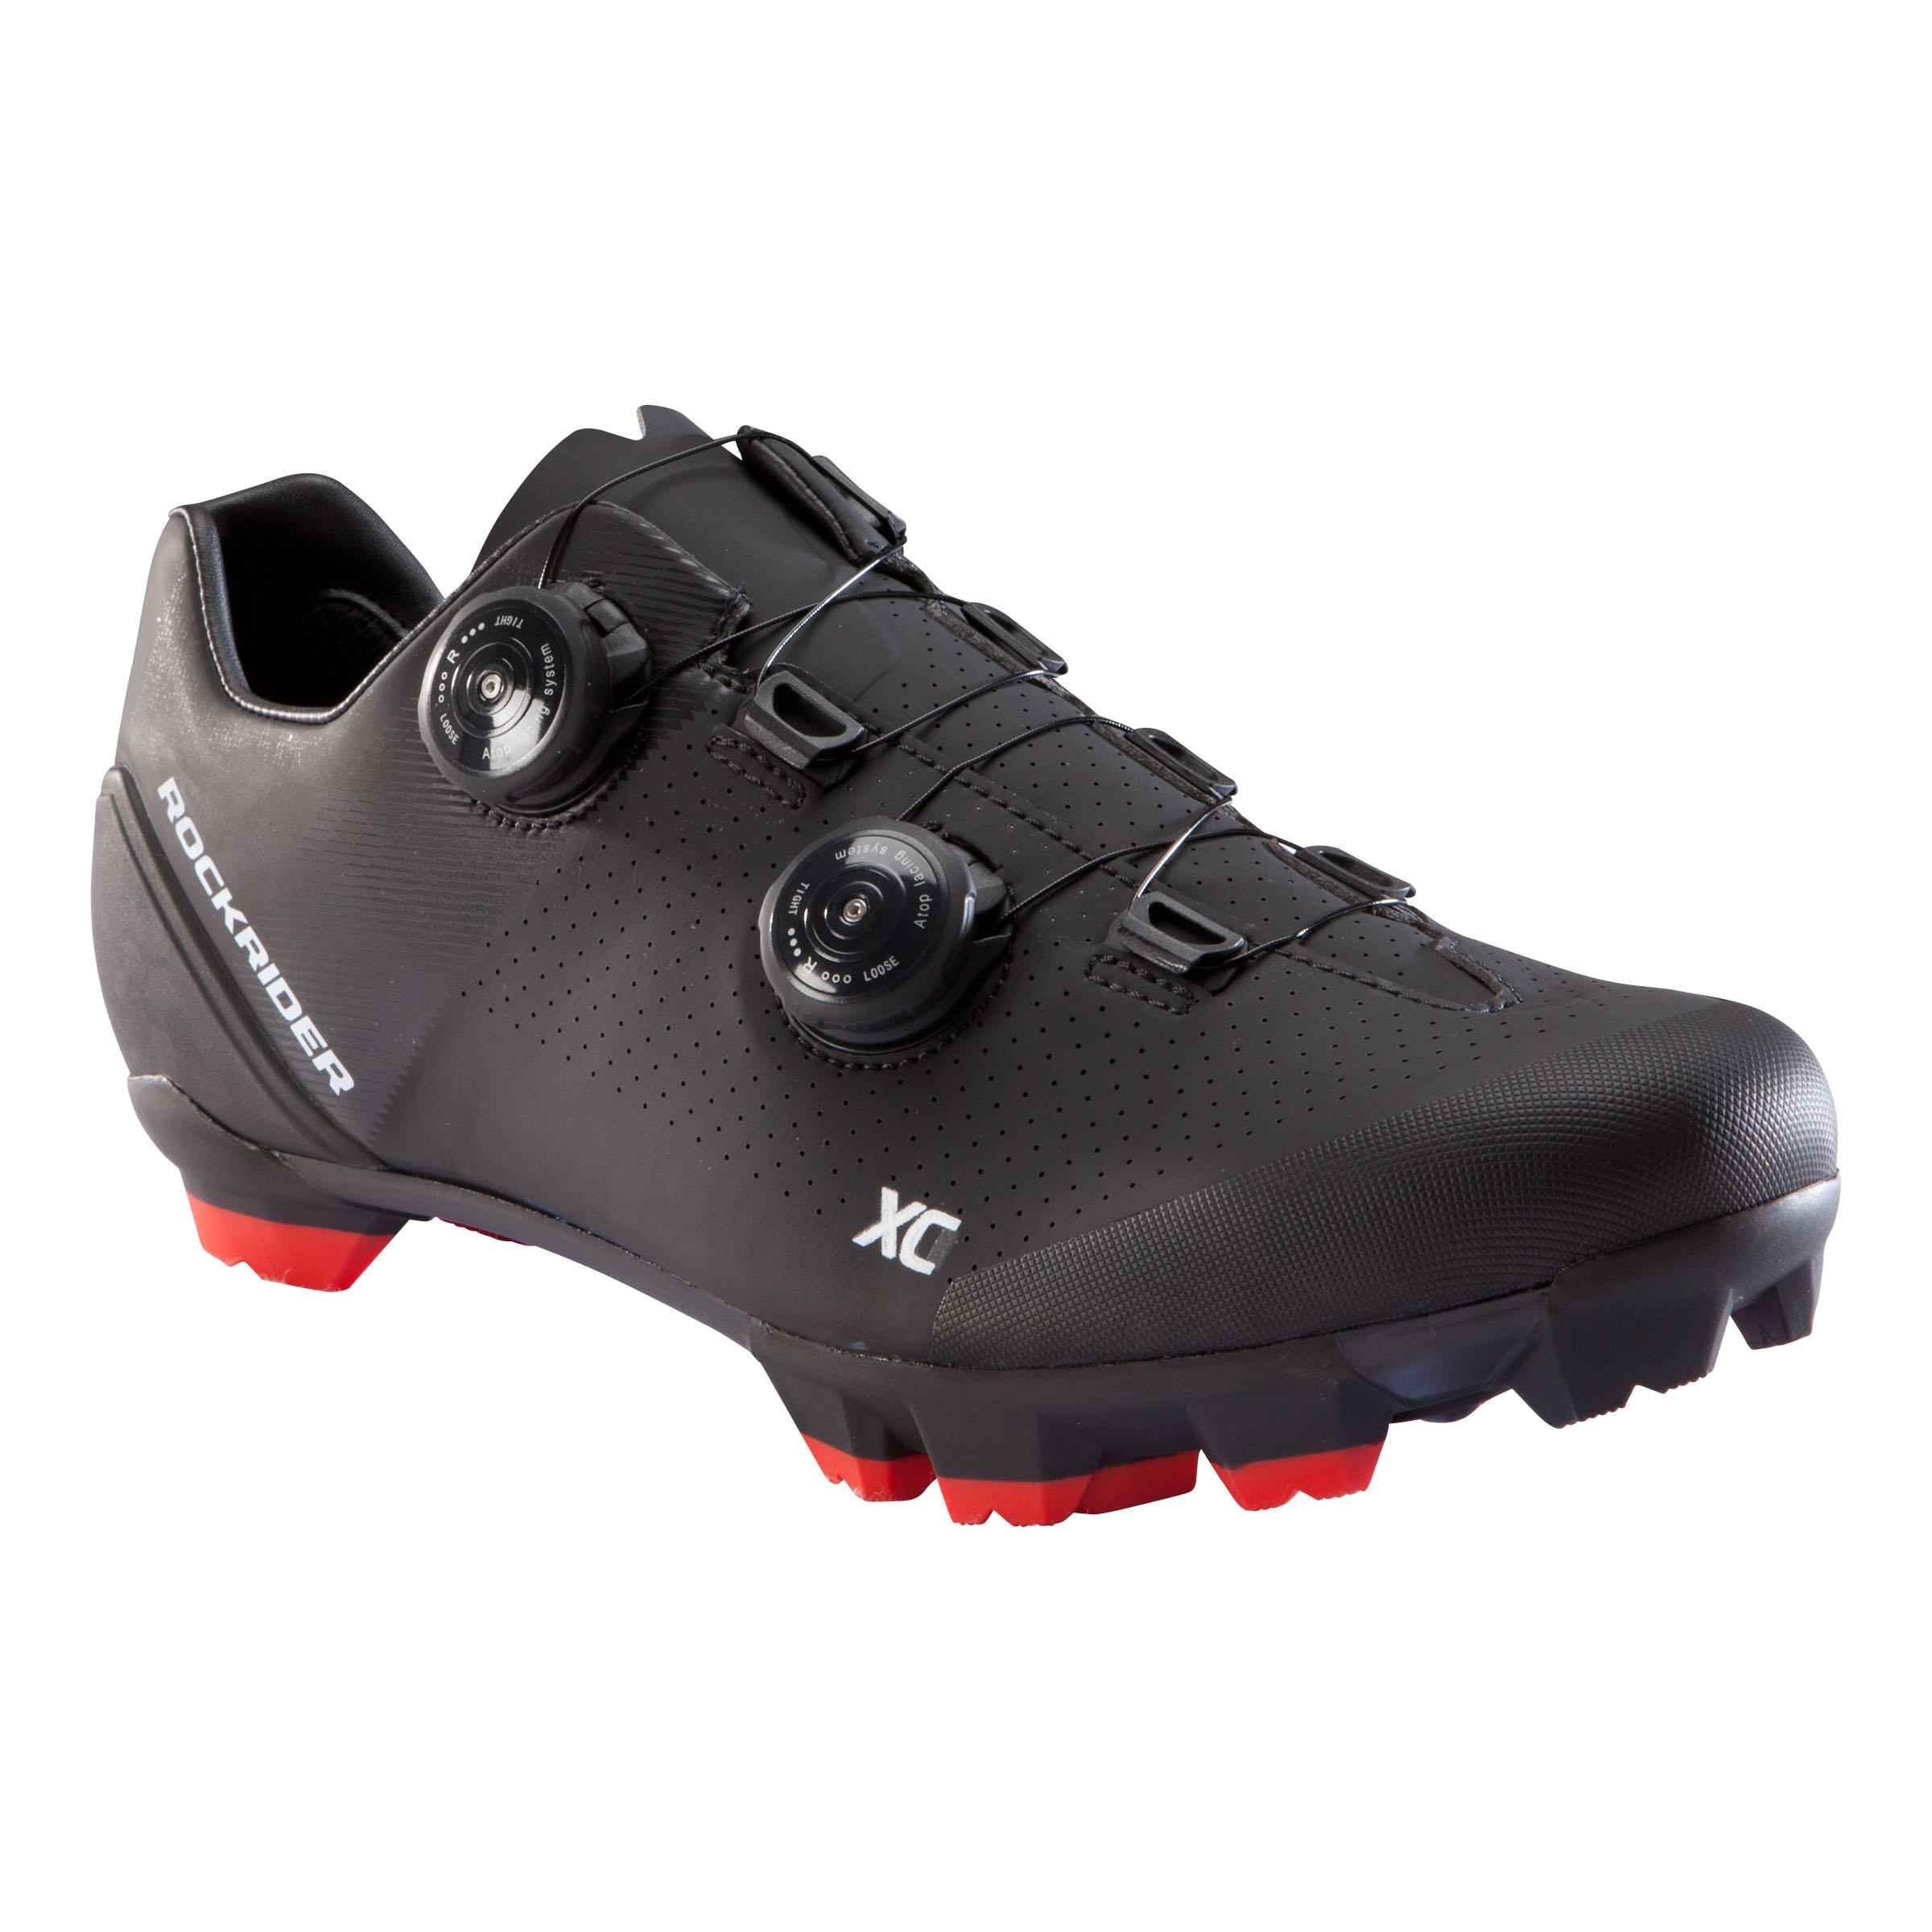 XC 900 Mountain Bike Shoes - Black 